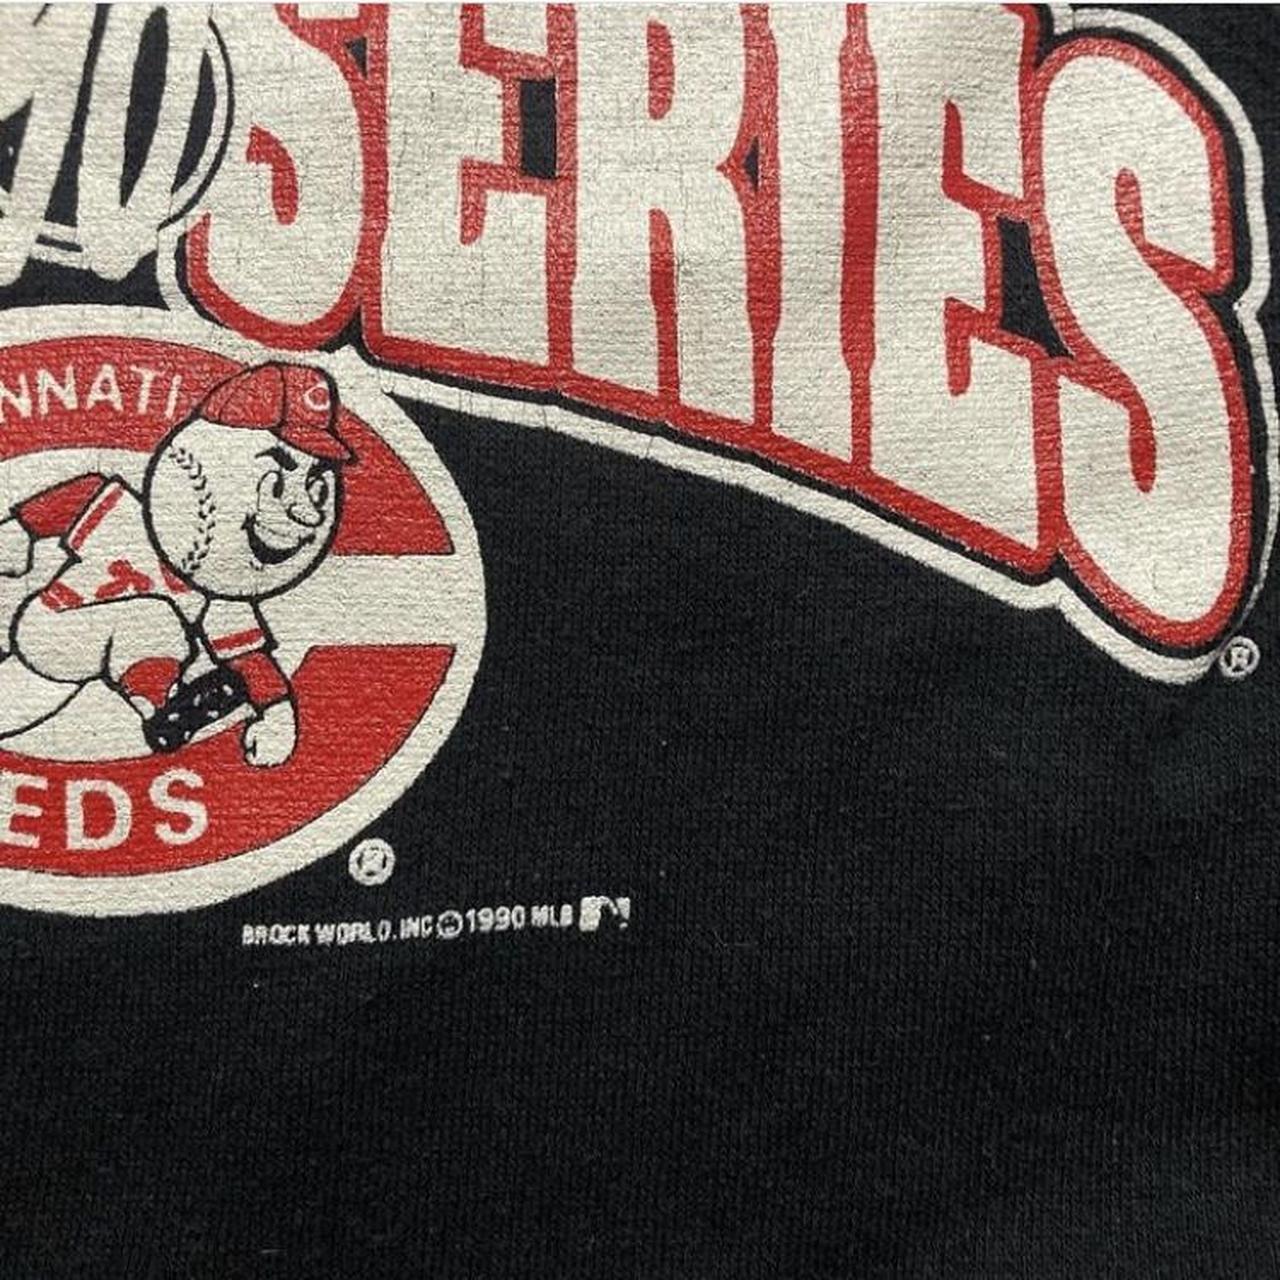 Vintage Cincinnati Reds Sweatshirt Adult Large 1995 Central Division  Champions